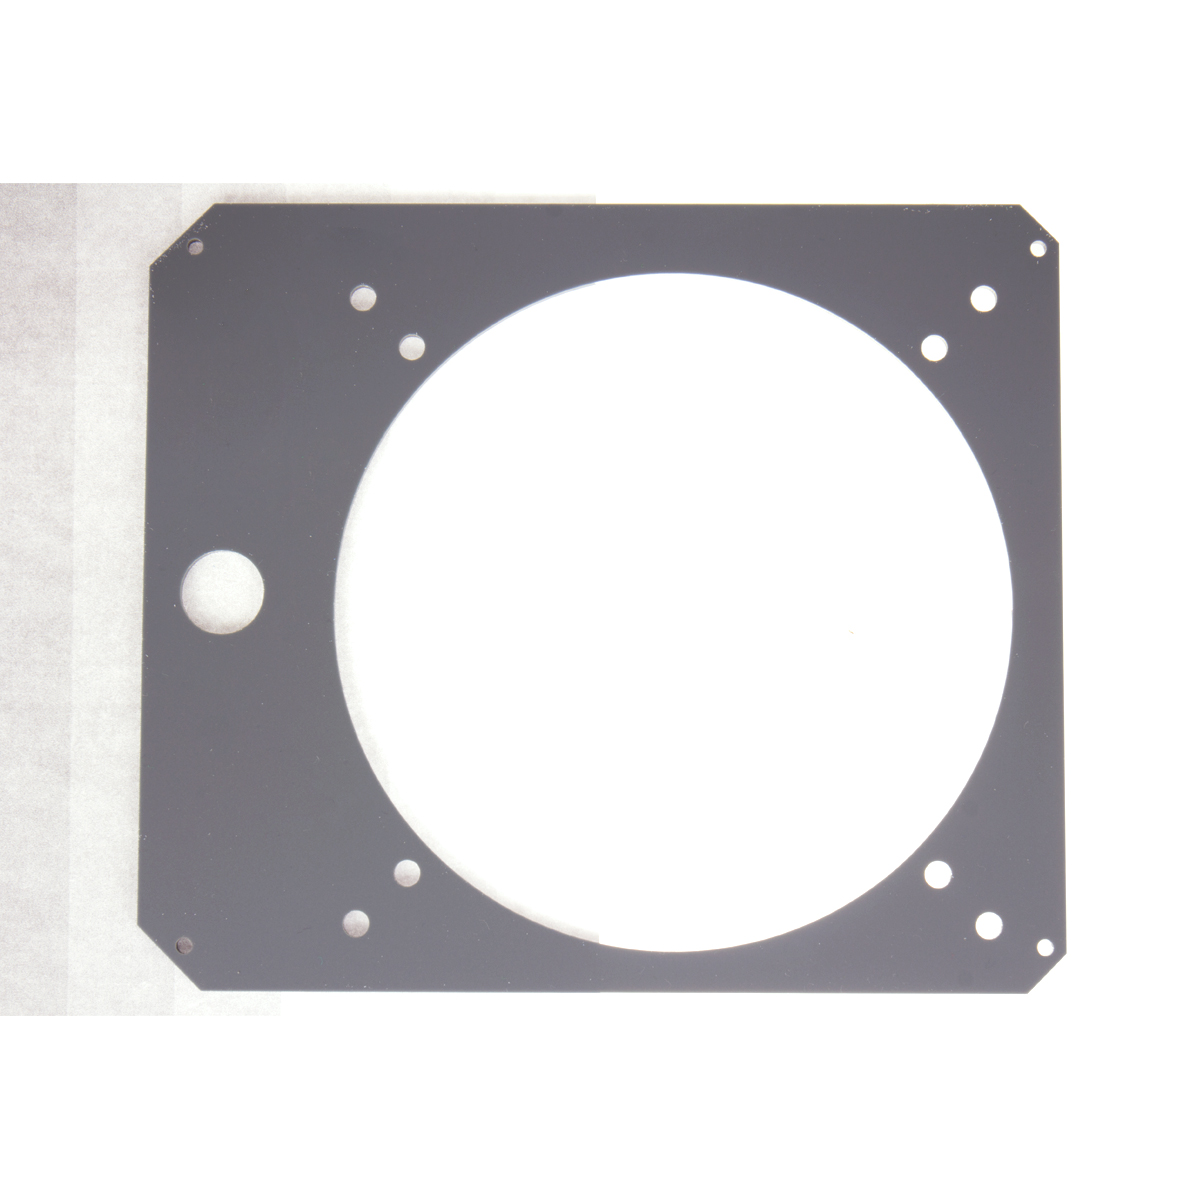 Lazer3D - Lazer3D LZ7 Right Panel (16mm Vandal) - Mineral Grey Open